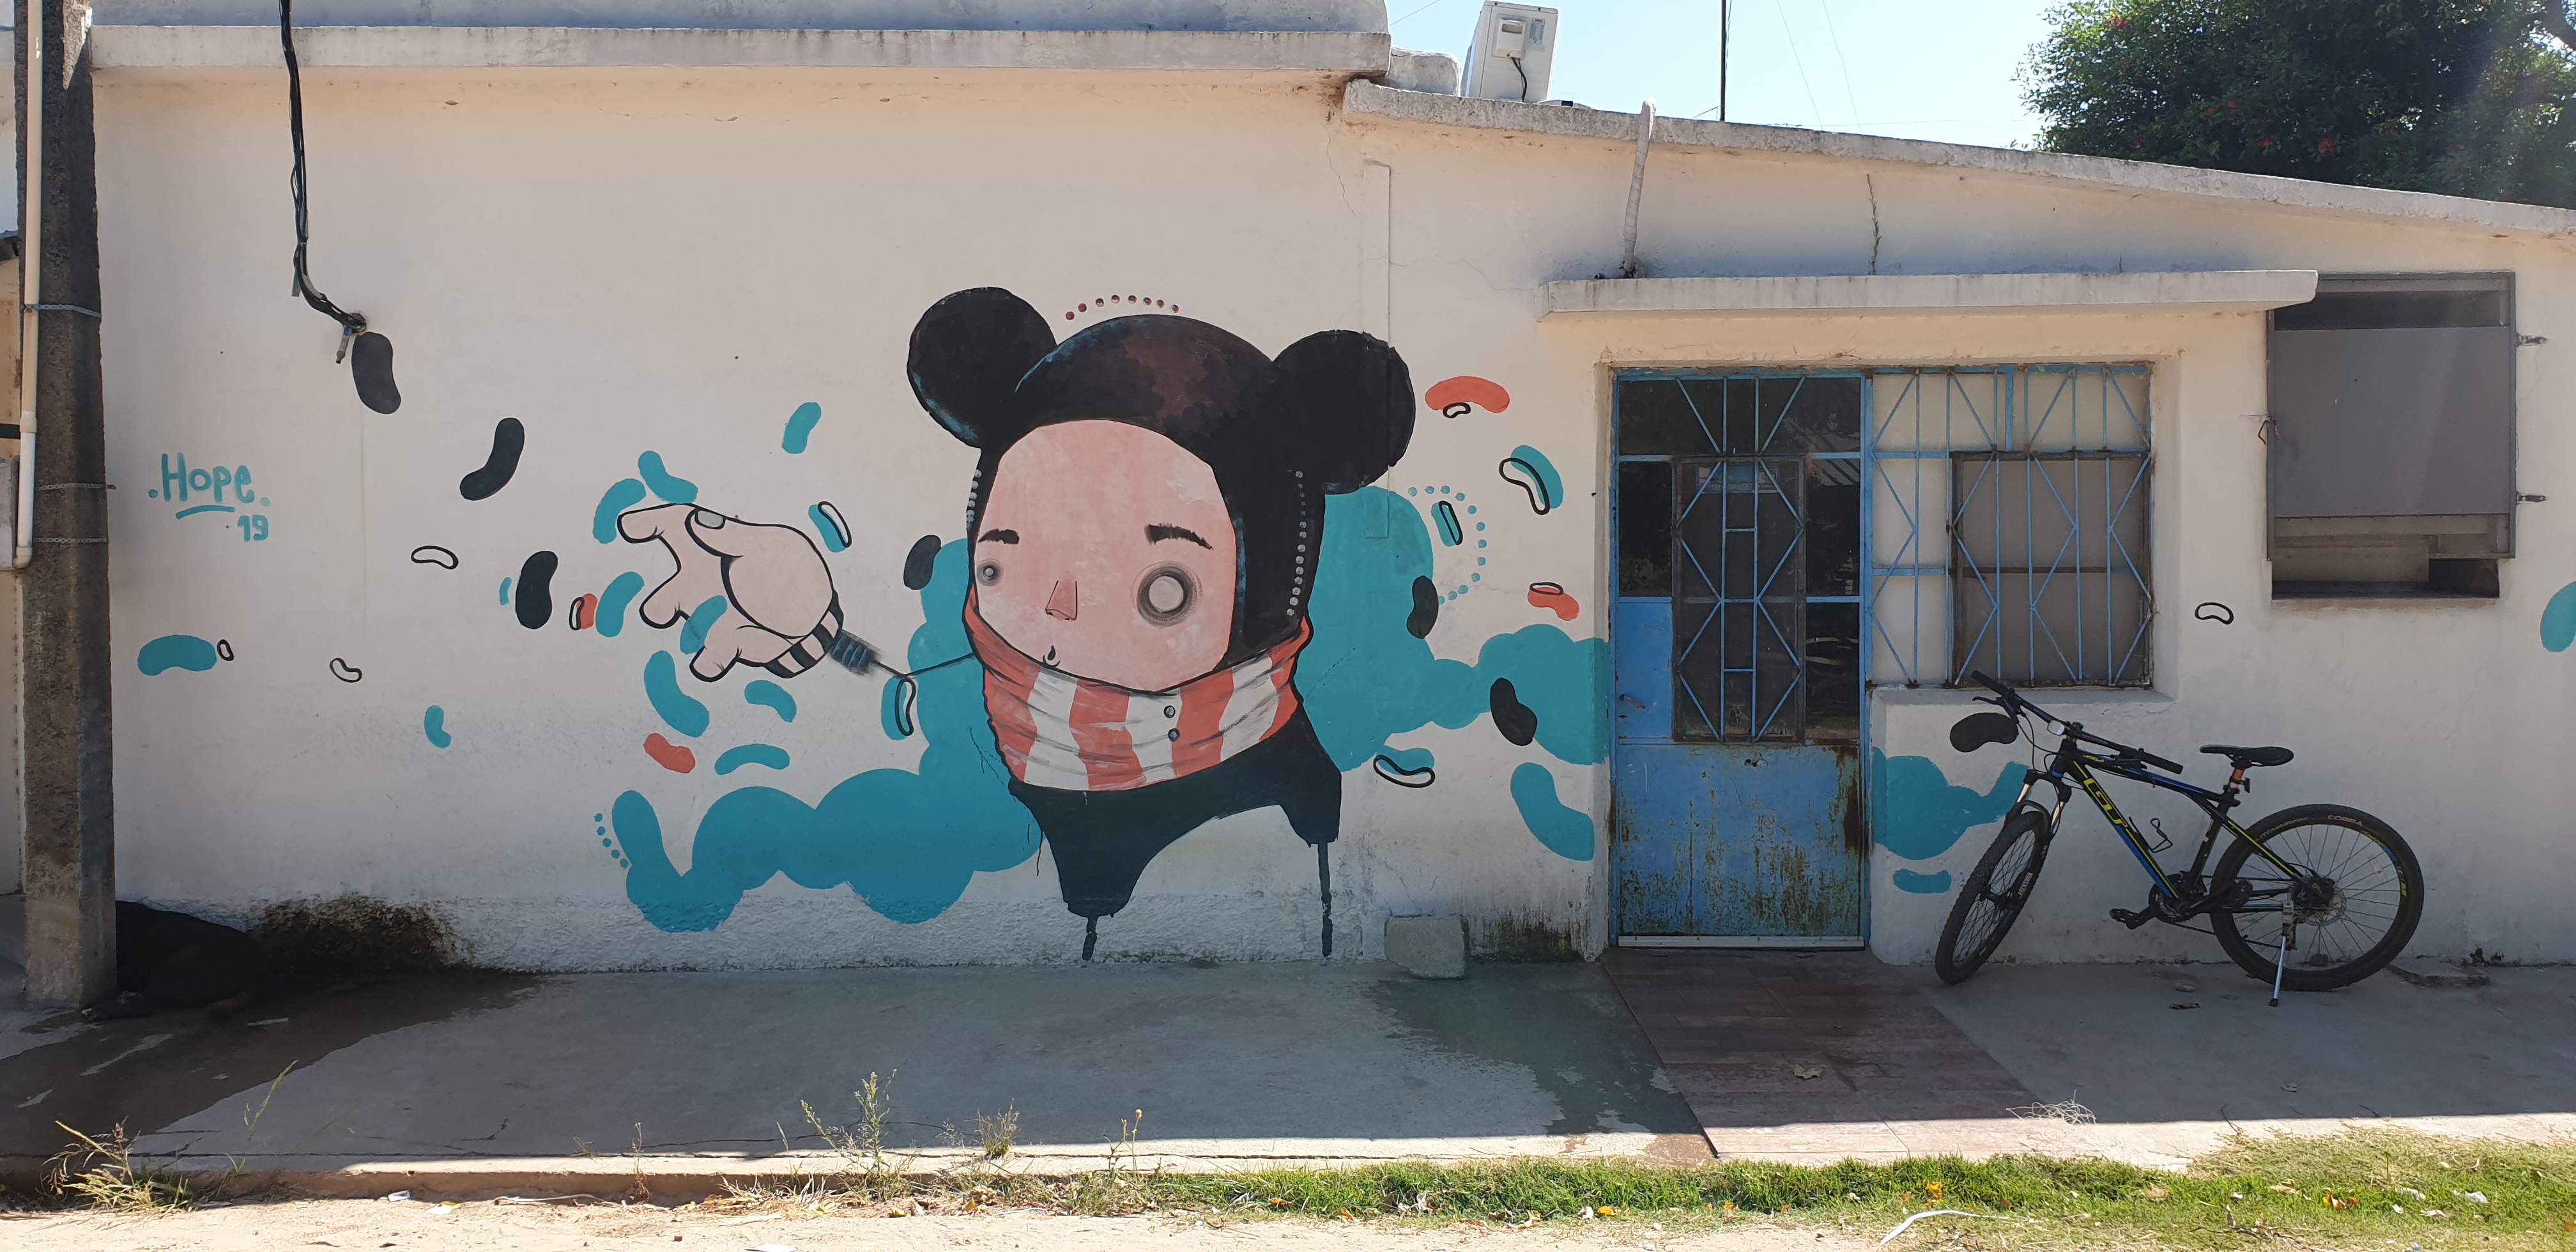 Mur réalisé par HOPE - Villa Soriano - Uruguay 2020 - ©nofakeinmynews.com